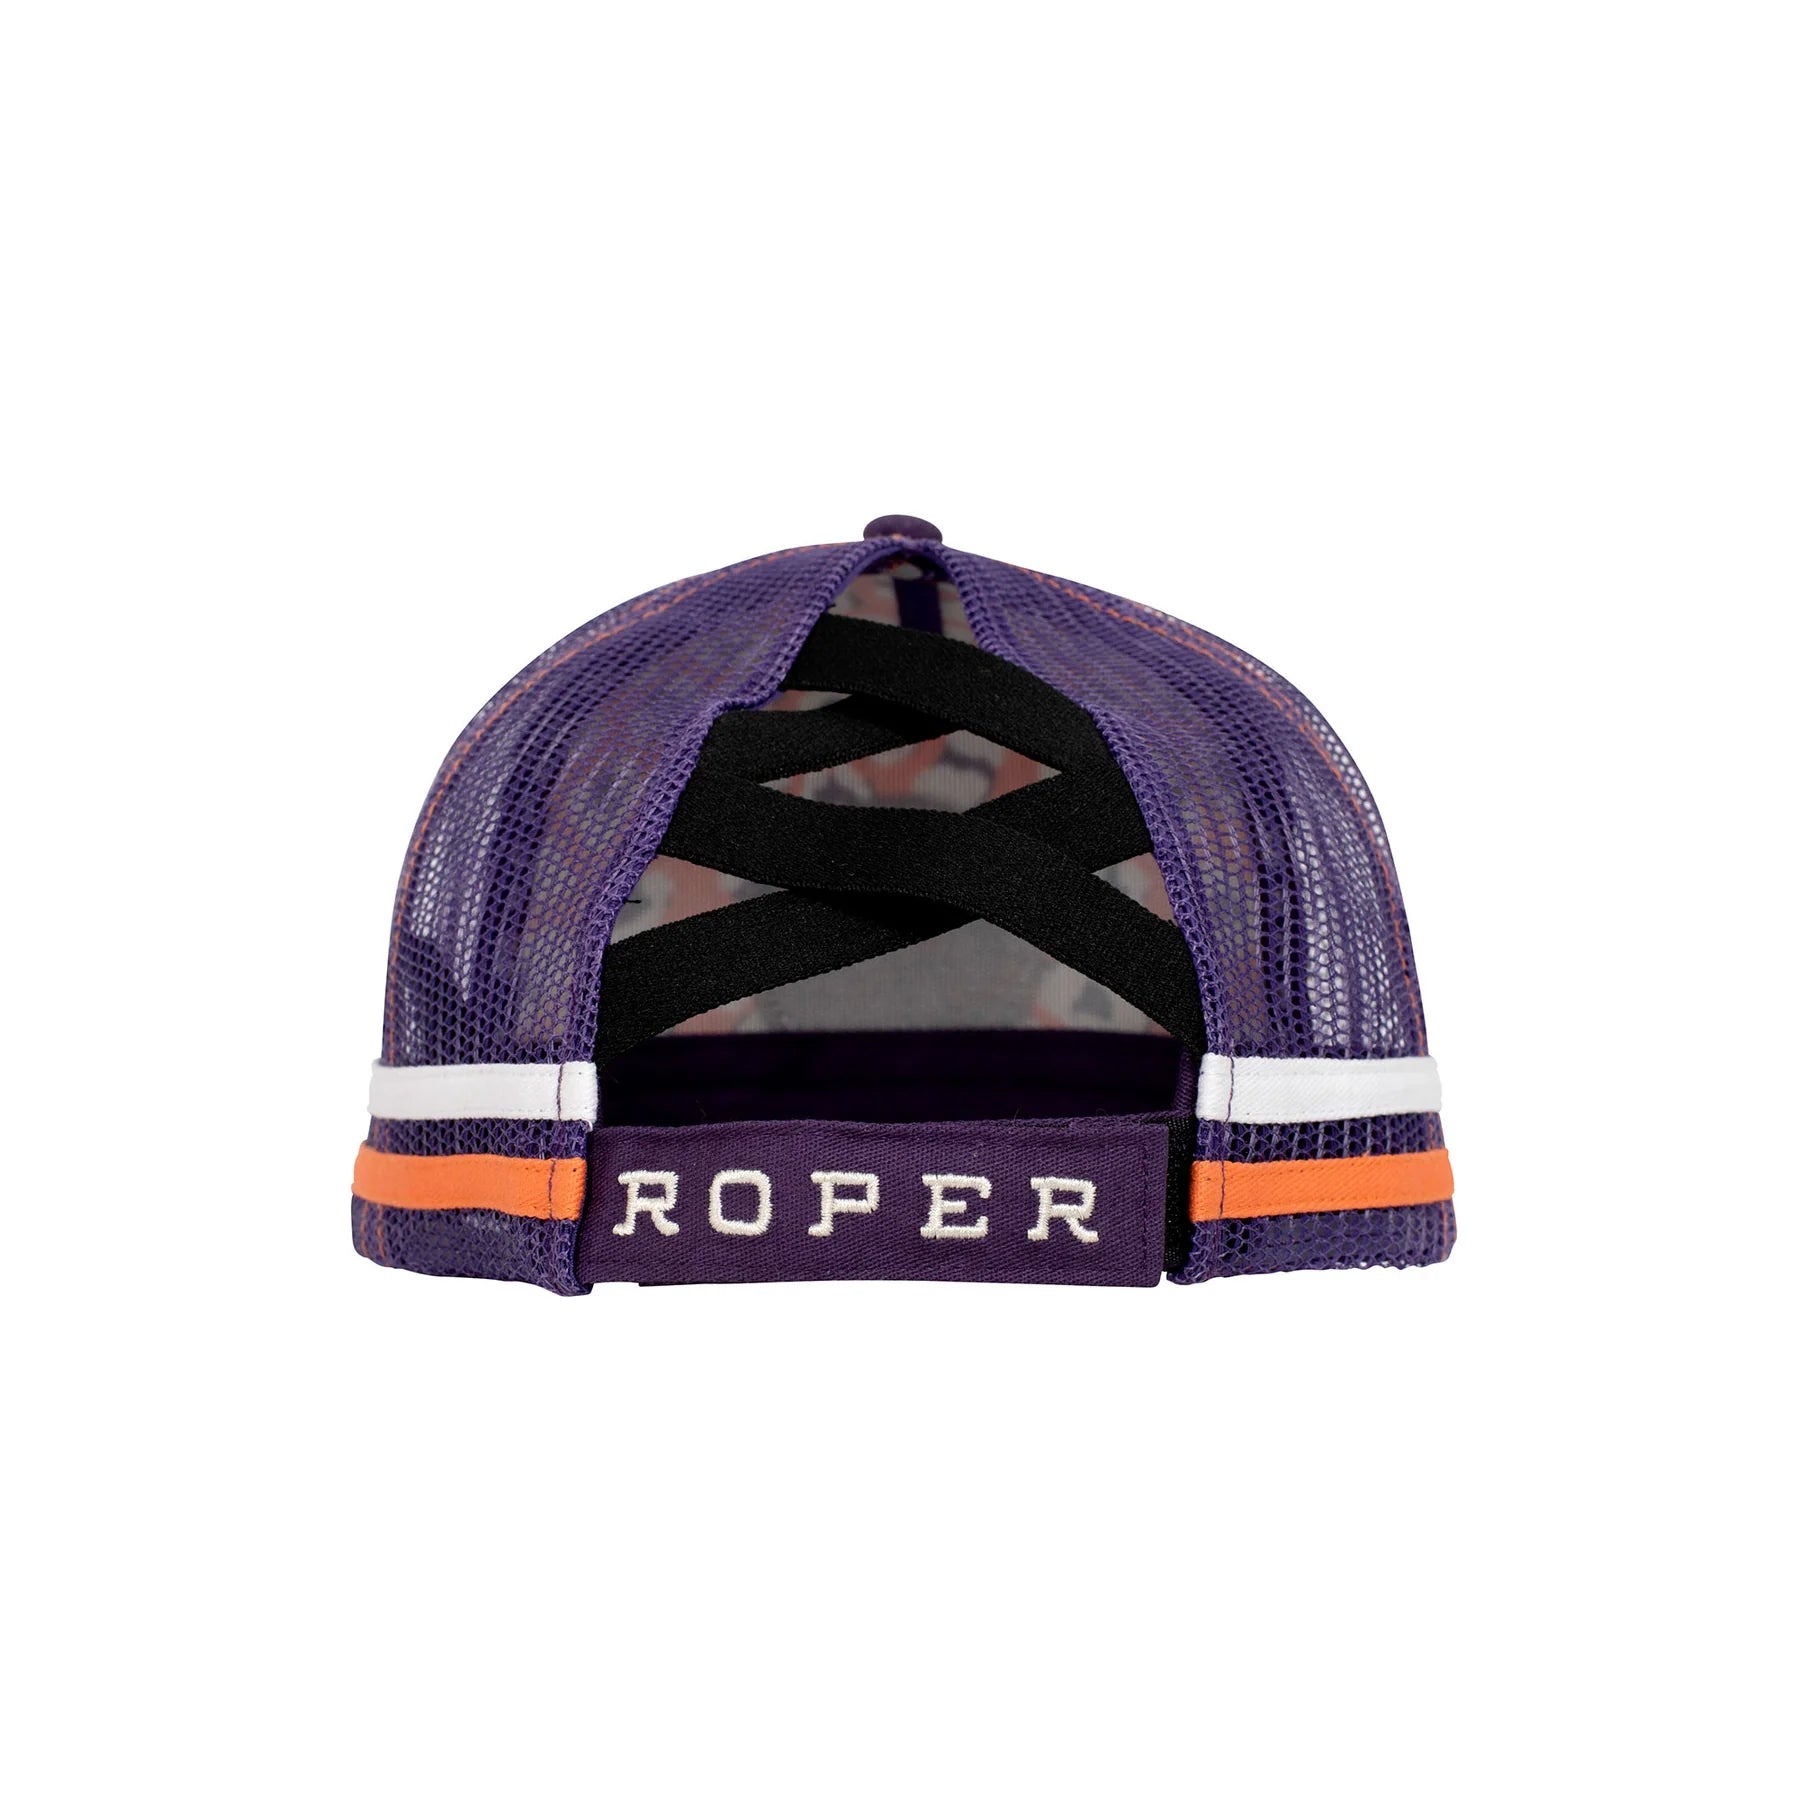 Roper Trucker Cap Leather Patch - Violet